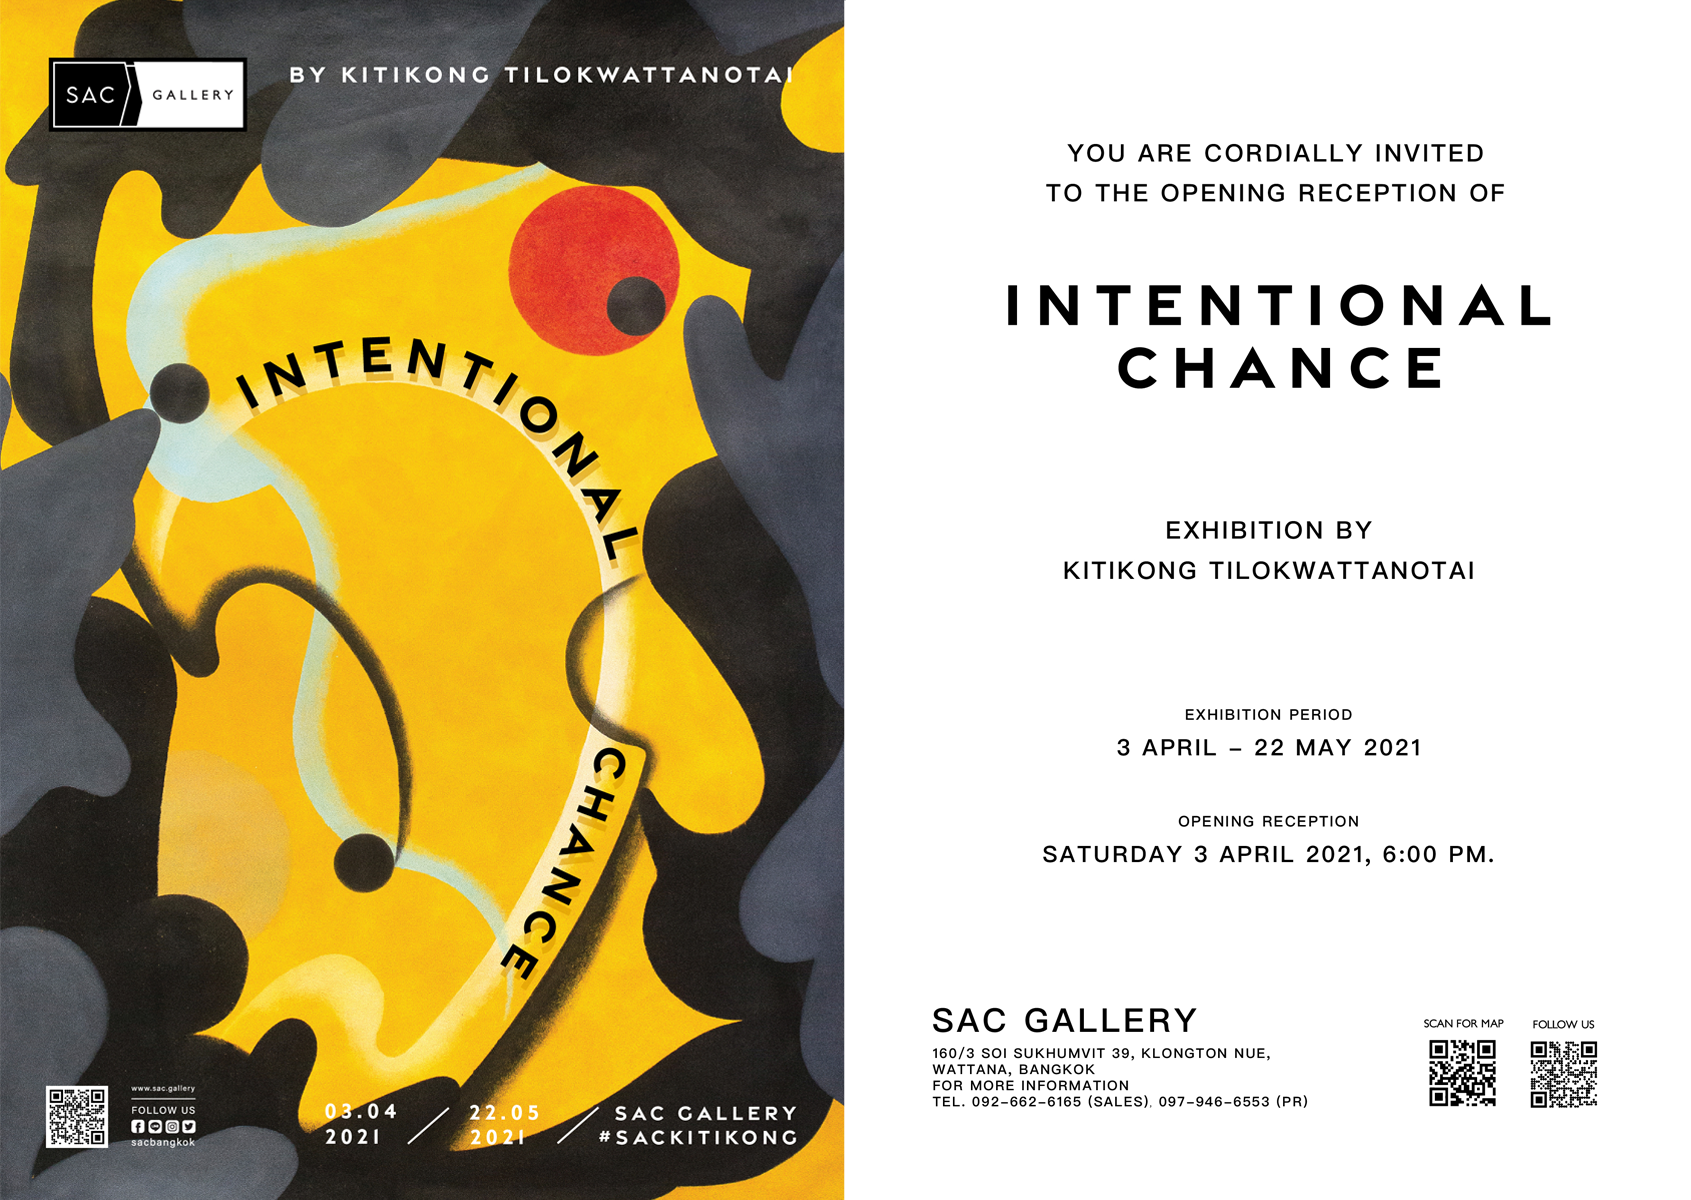 SAC Gallery ชวนชมนิทรรศการ "Intentional Chance" โดย กิติก้อง ติลกวัฒโนทัย ค้นหาความหมายด้วยรหัสภาษาของพู่กัน